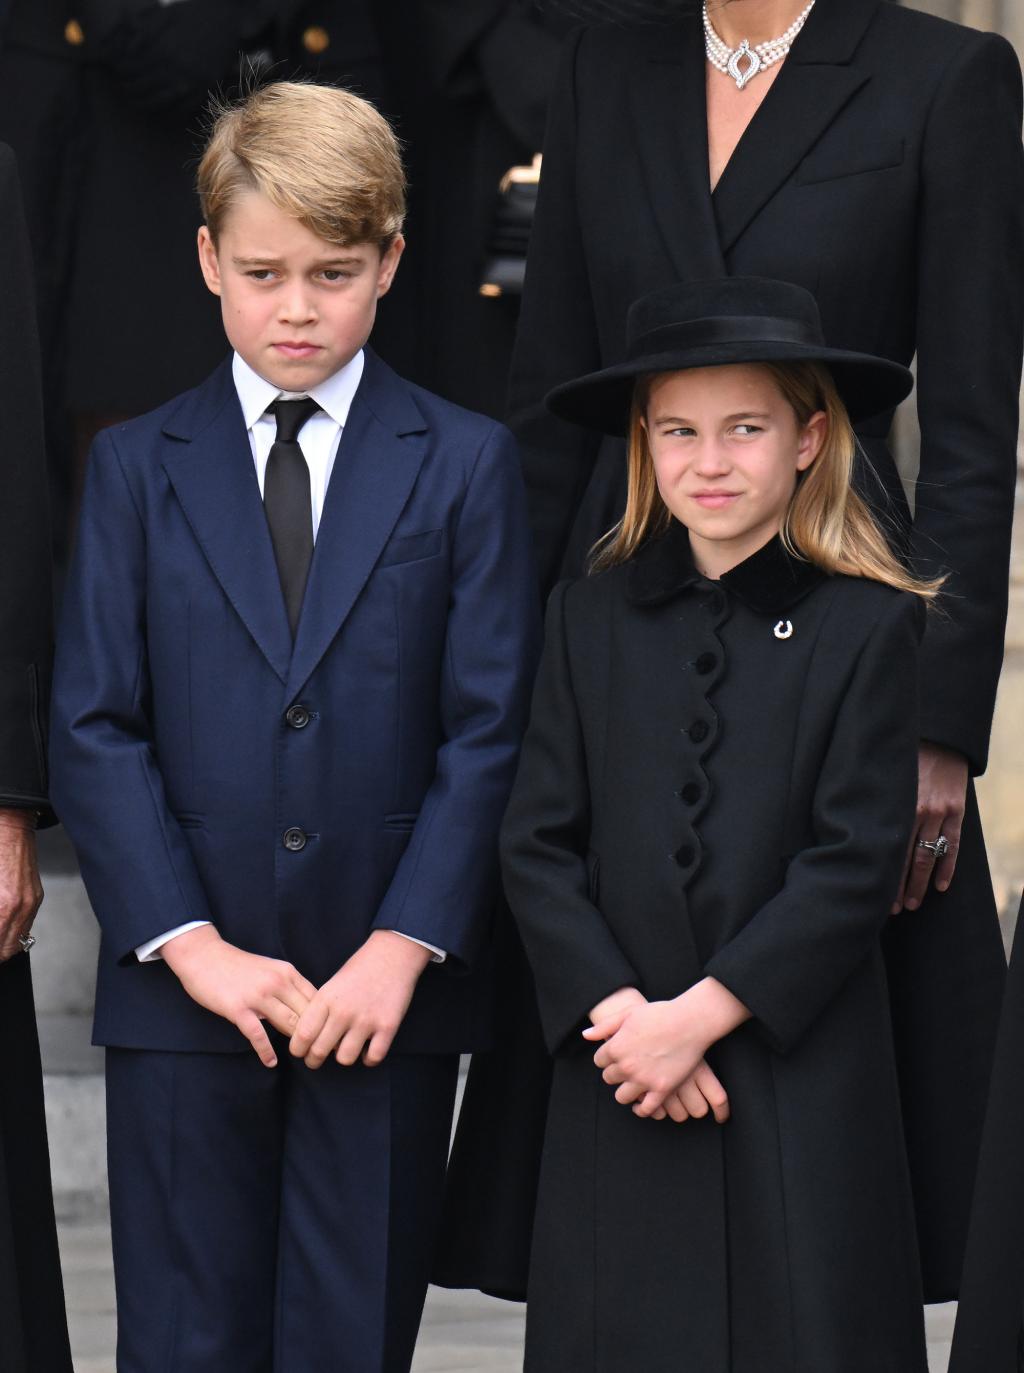 State funeral for Queen Elizabeth II